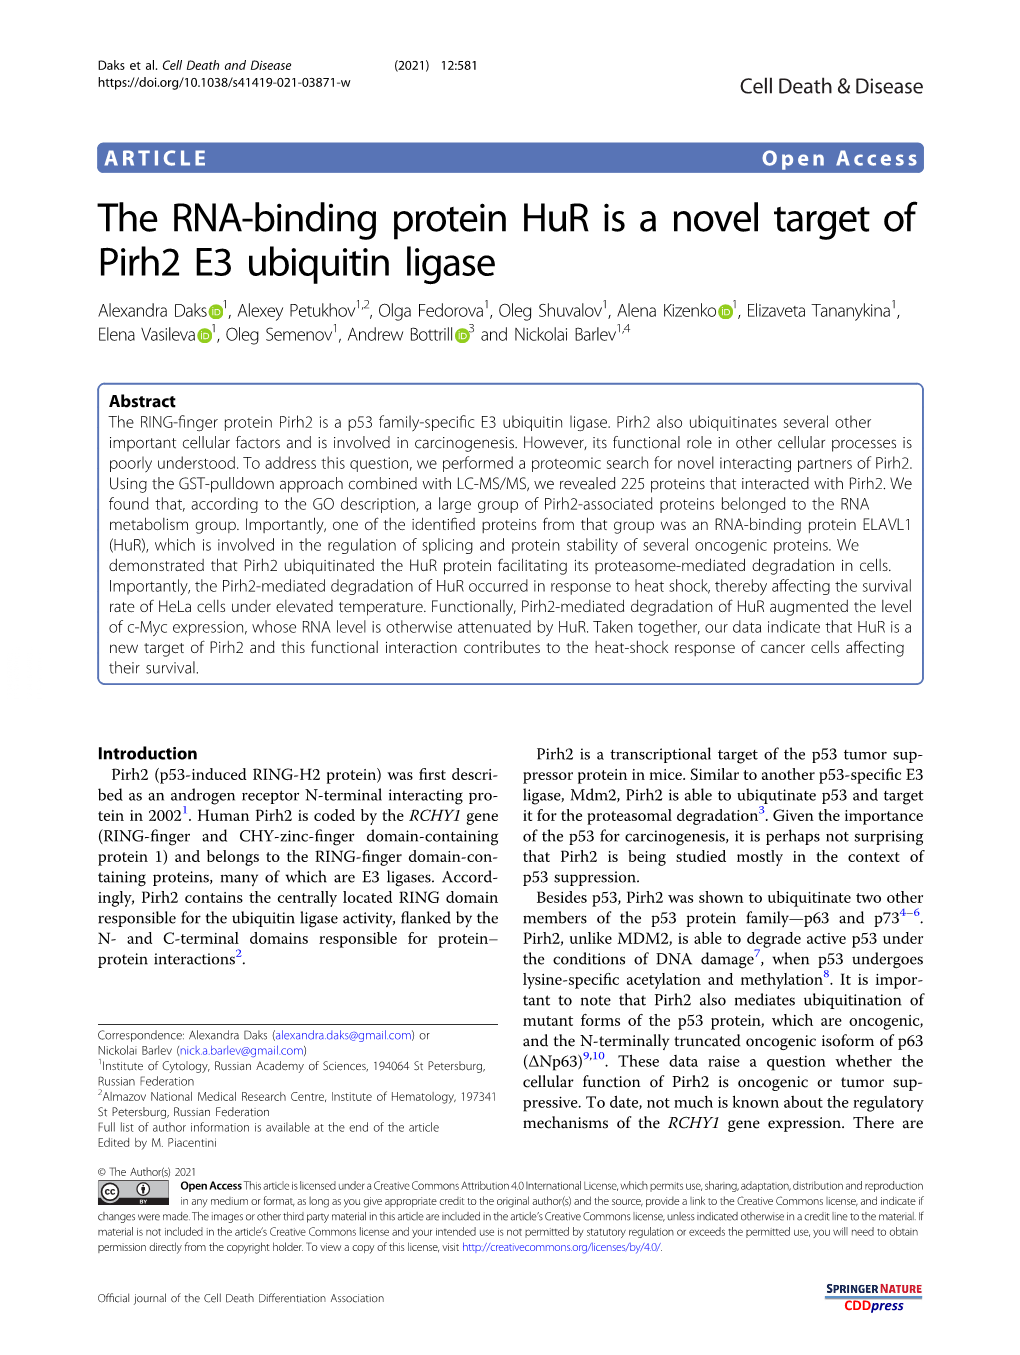 The RNA-Binding Protein Hur Is a Novel Target of Pirh2 E3 Ubiquitin